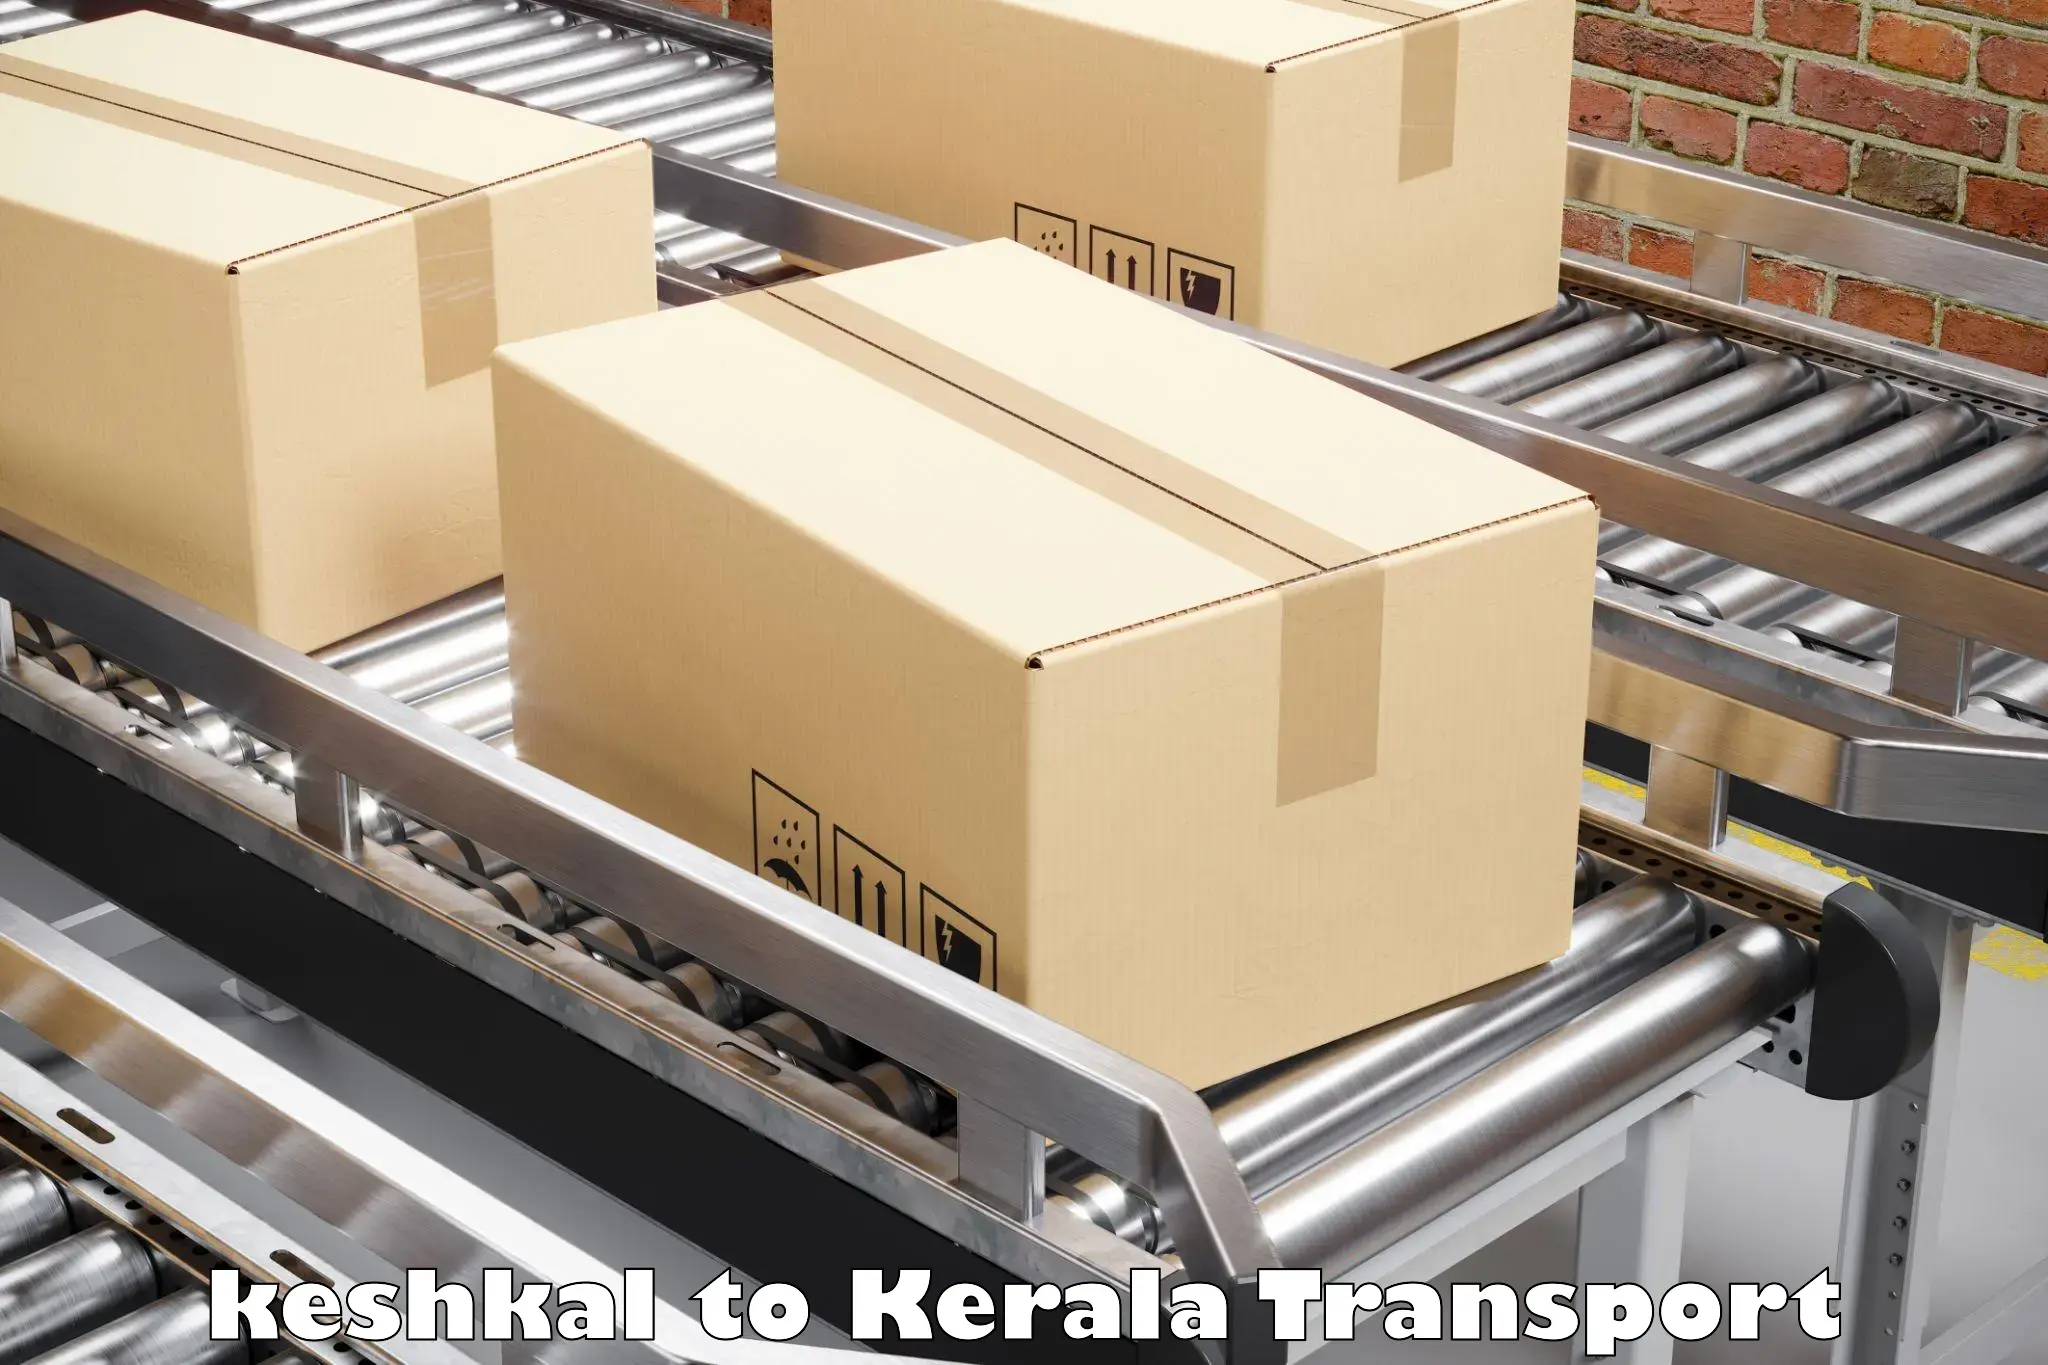 Express transport services keshkal to Kodungallur